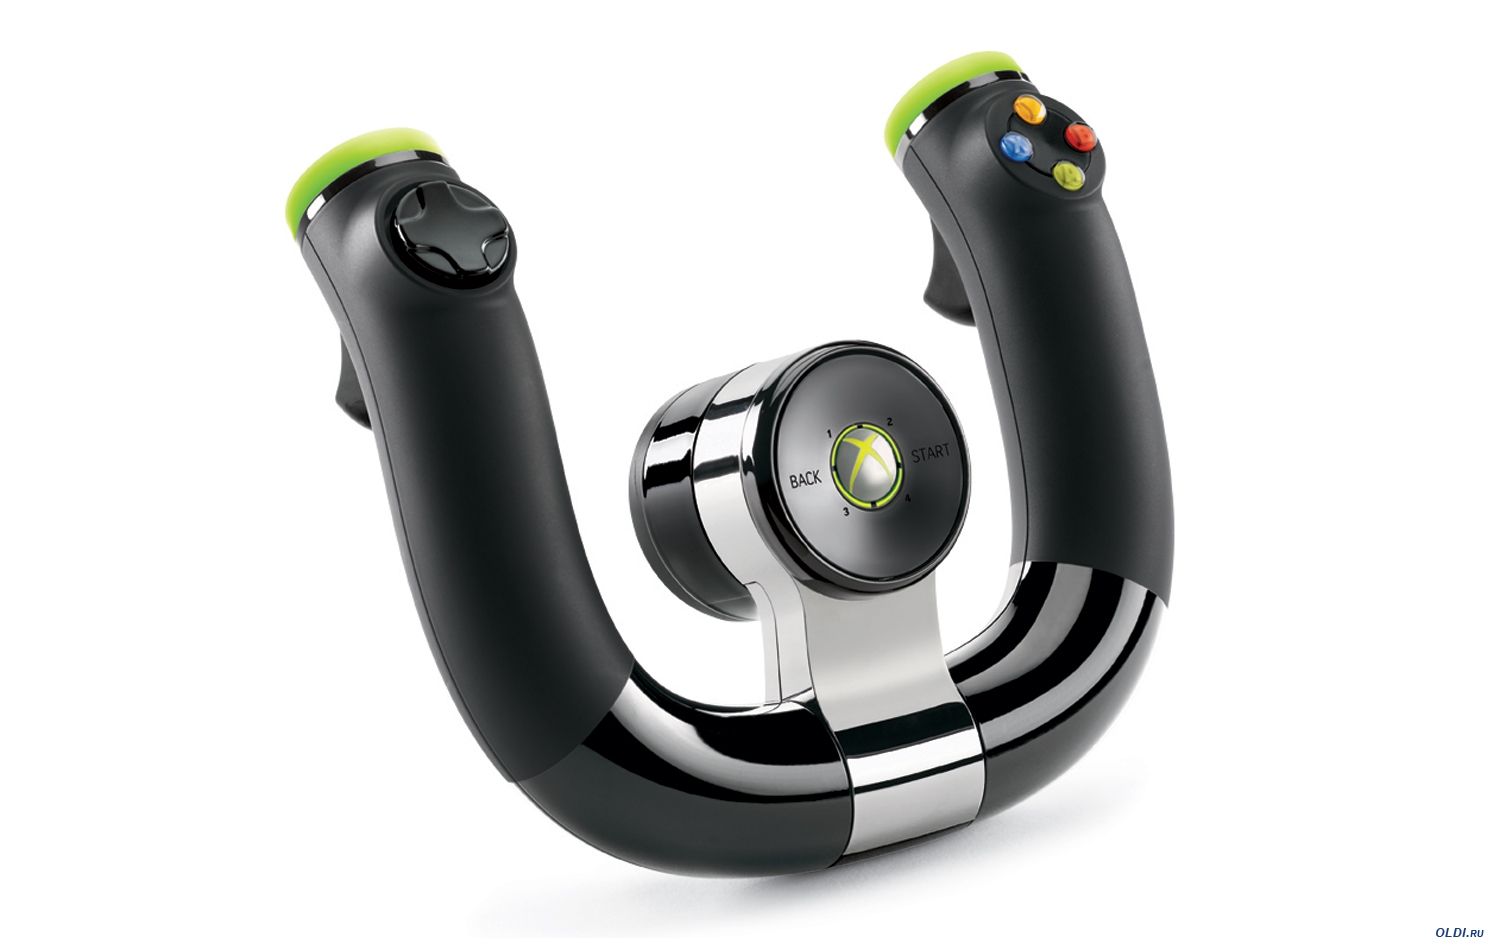 Б 360. Беспроводной руль для Xbox 360. Xbox 360 Wireless Speed Wheel. Руль для хбокс 360.